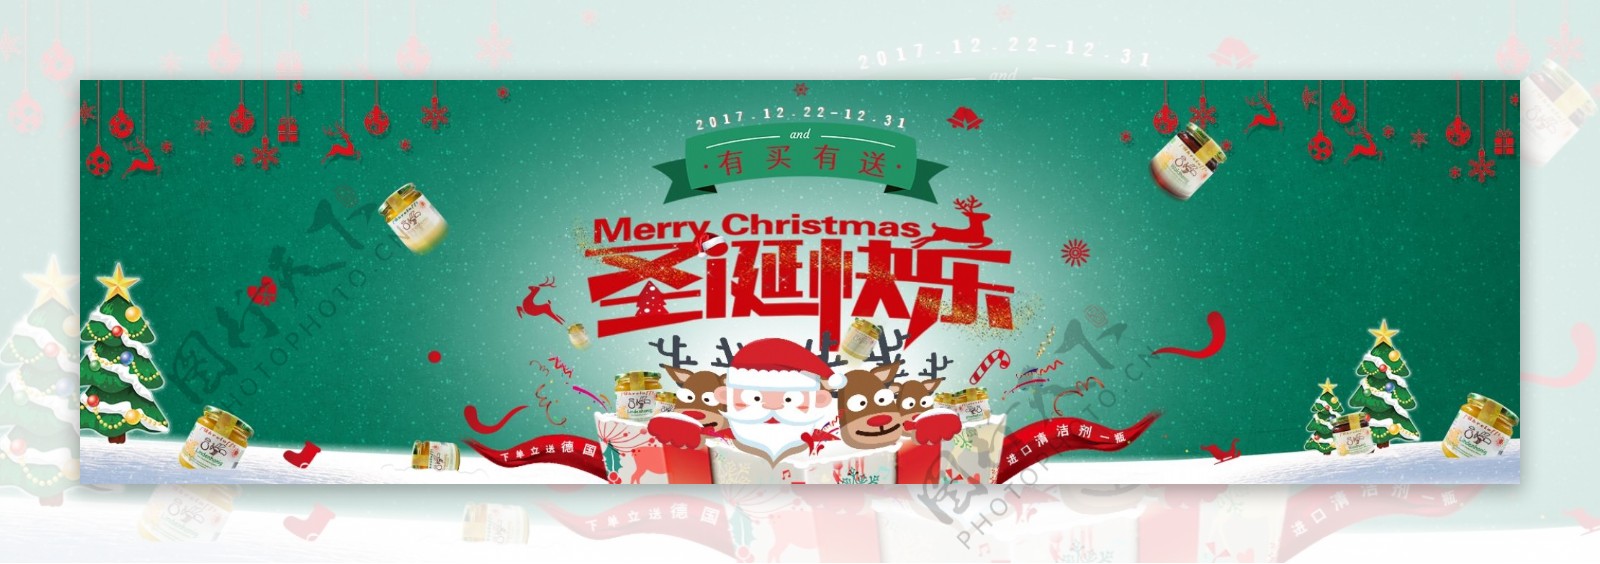 淘宝圣诞节促销活动banner模板